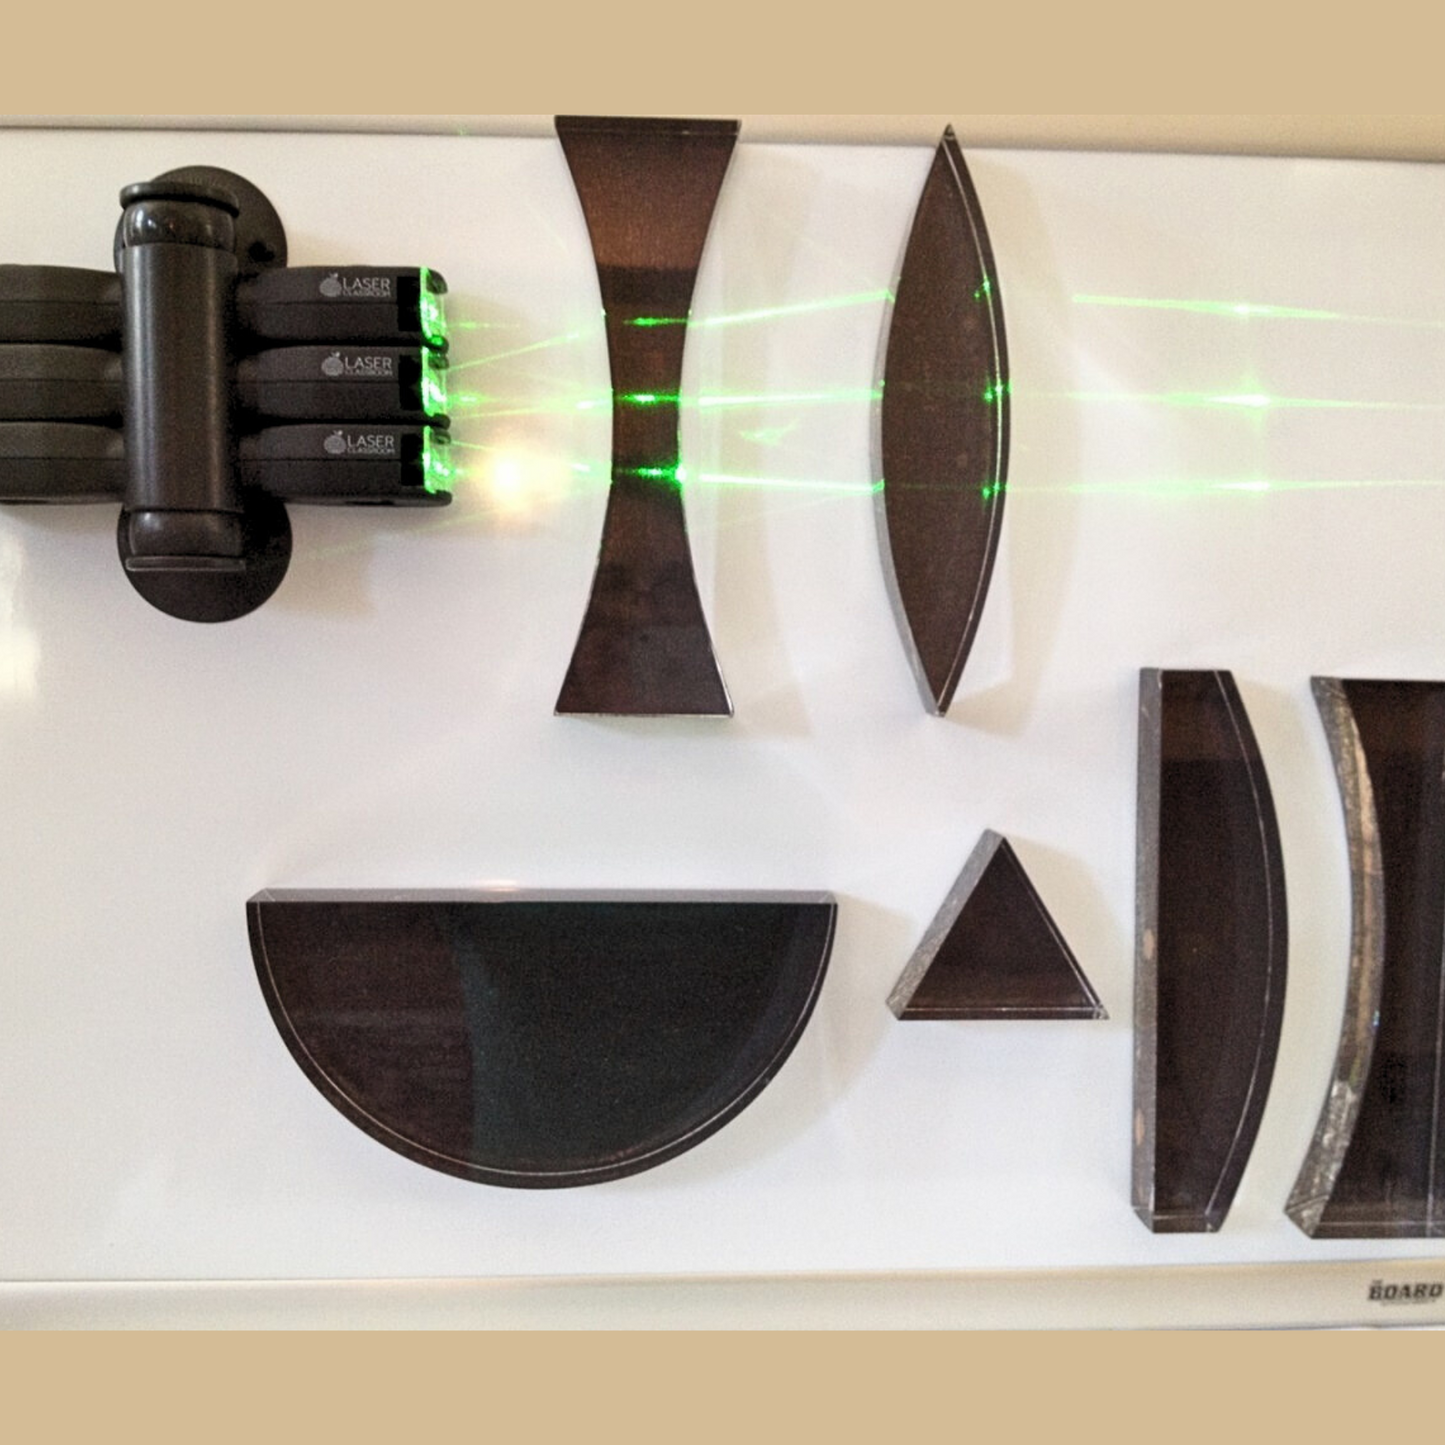 Green Laser Magnetic White Board Optics Demonstration Set